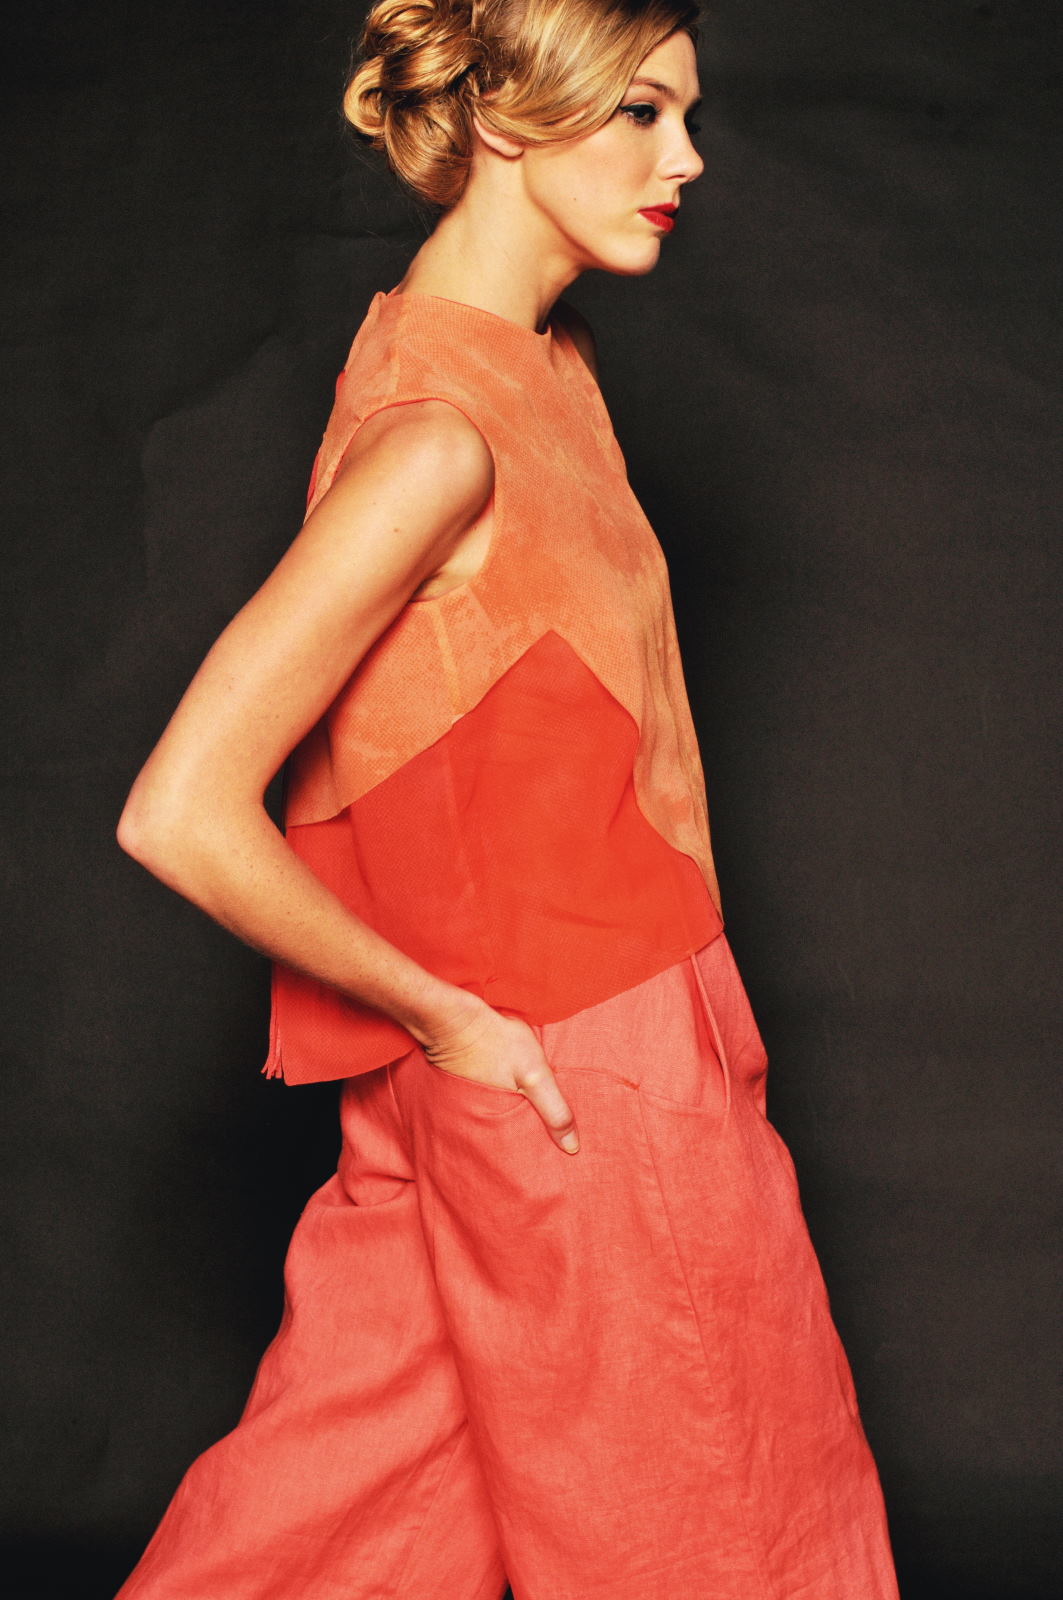 Sydney Fashion Photography by Kent Johnson, baggy orange calotts matching top.